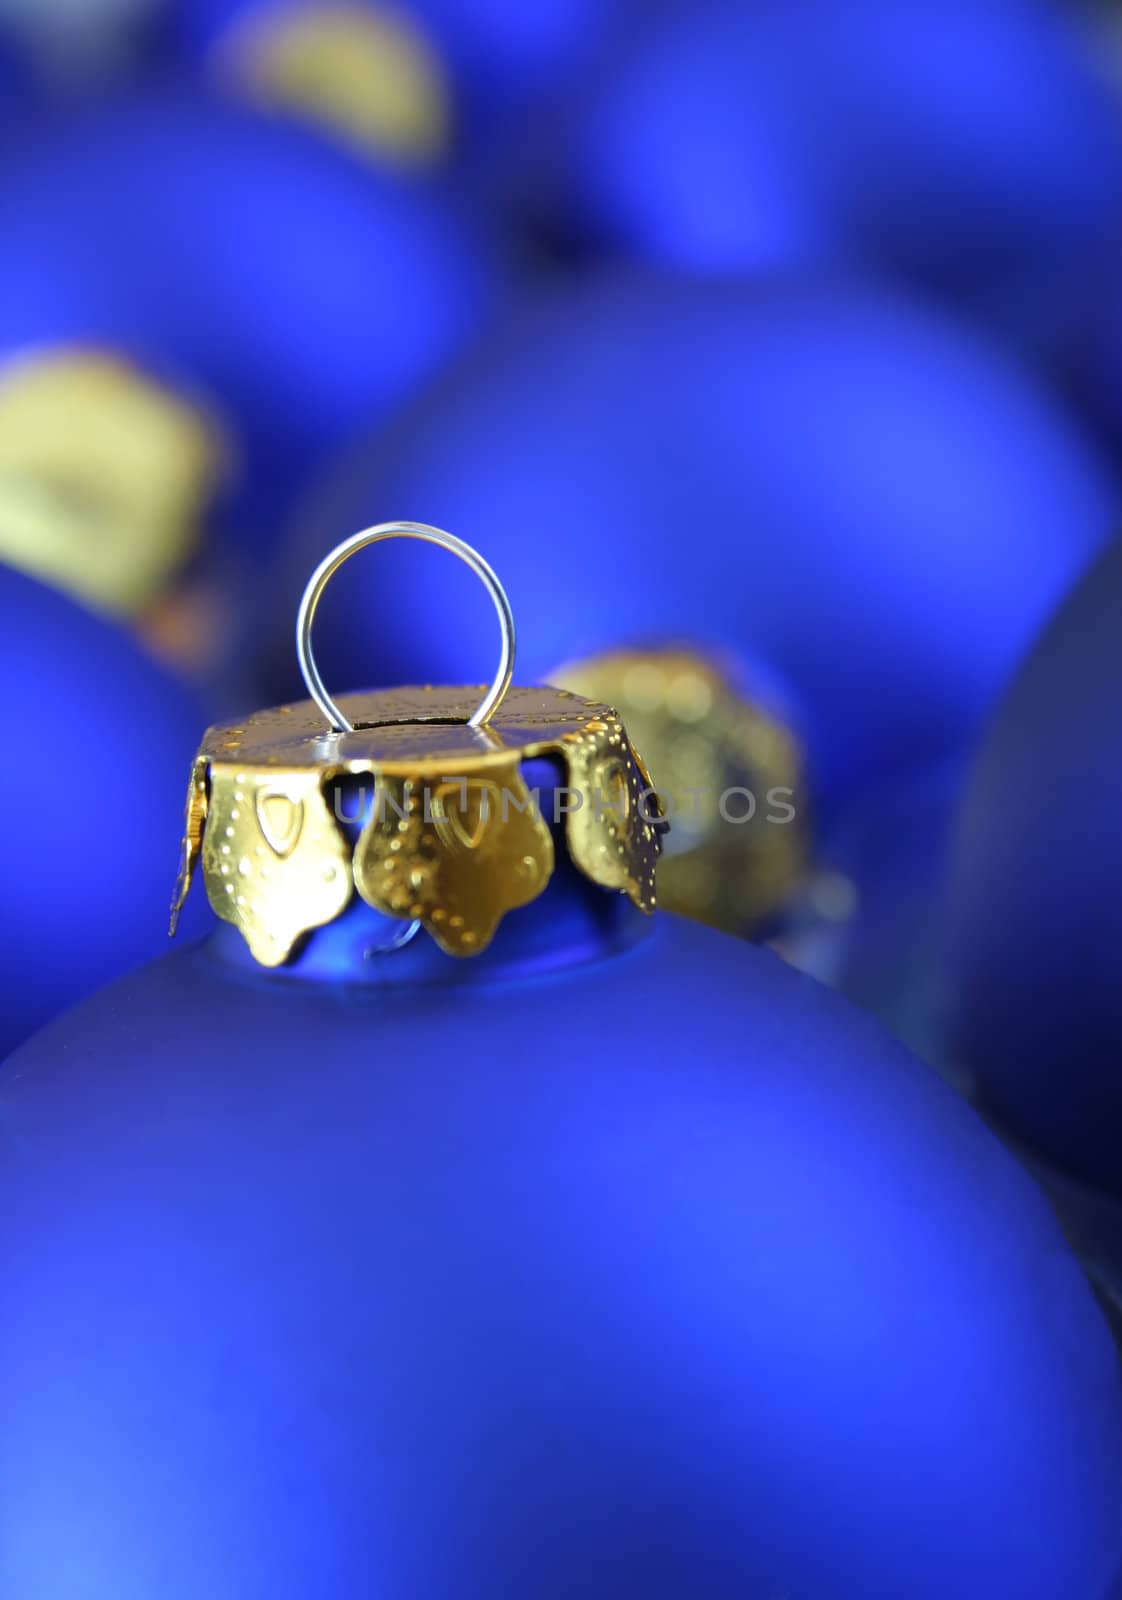 Macro of blue Christmas ornament

